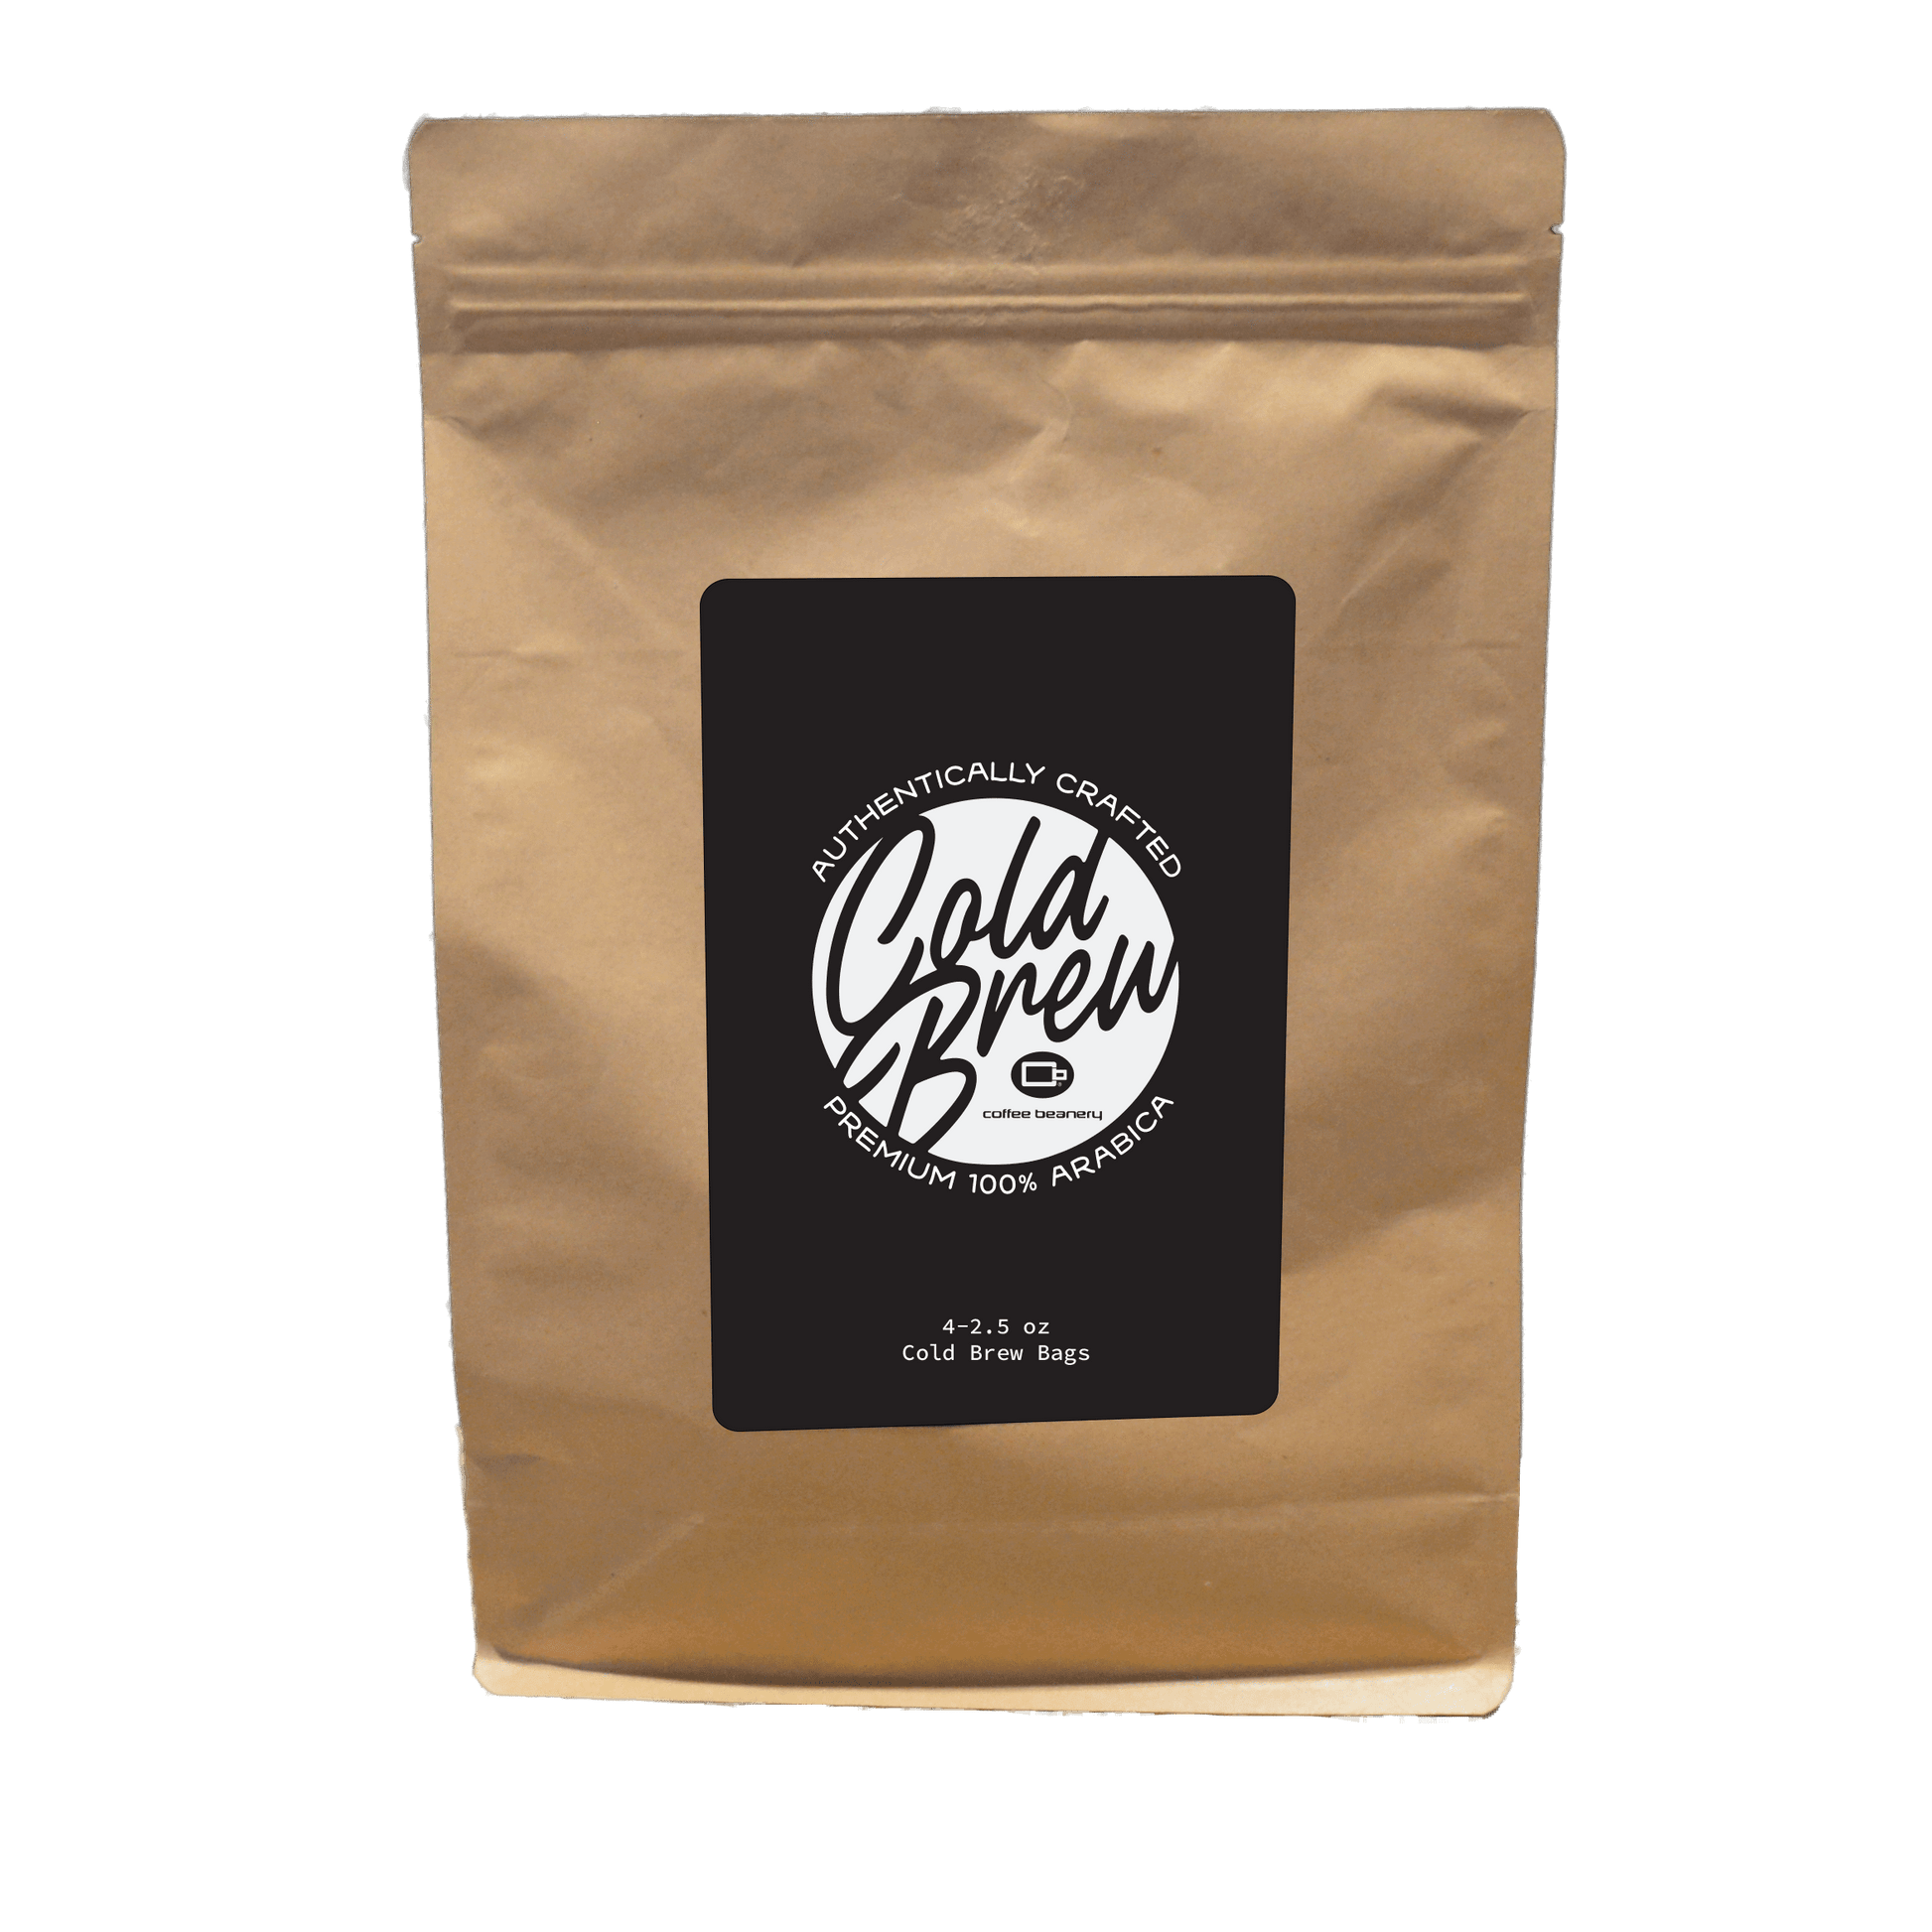 Home Beer Brewing Kits, Single Serve Coffee